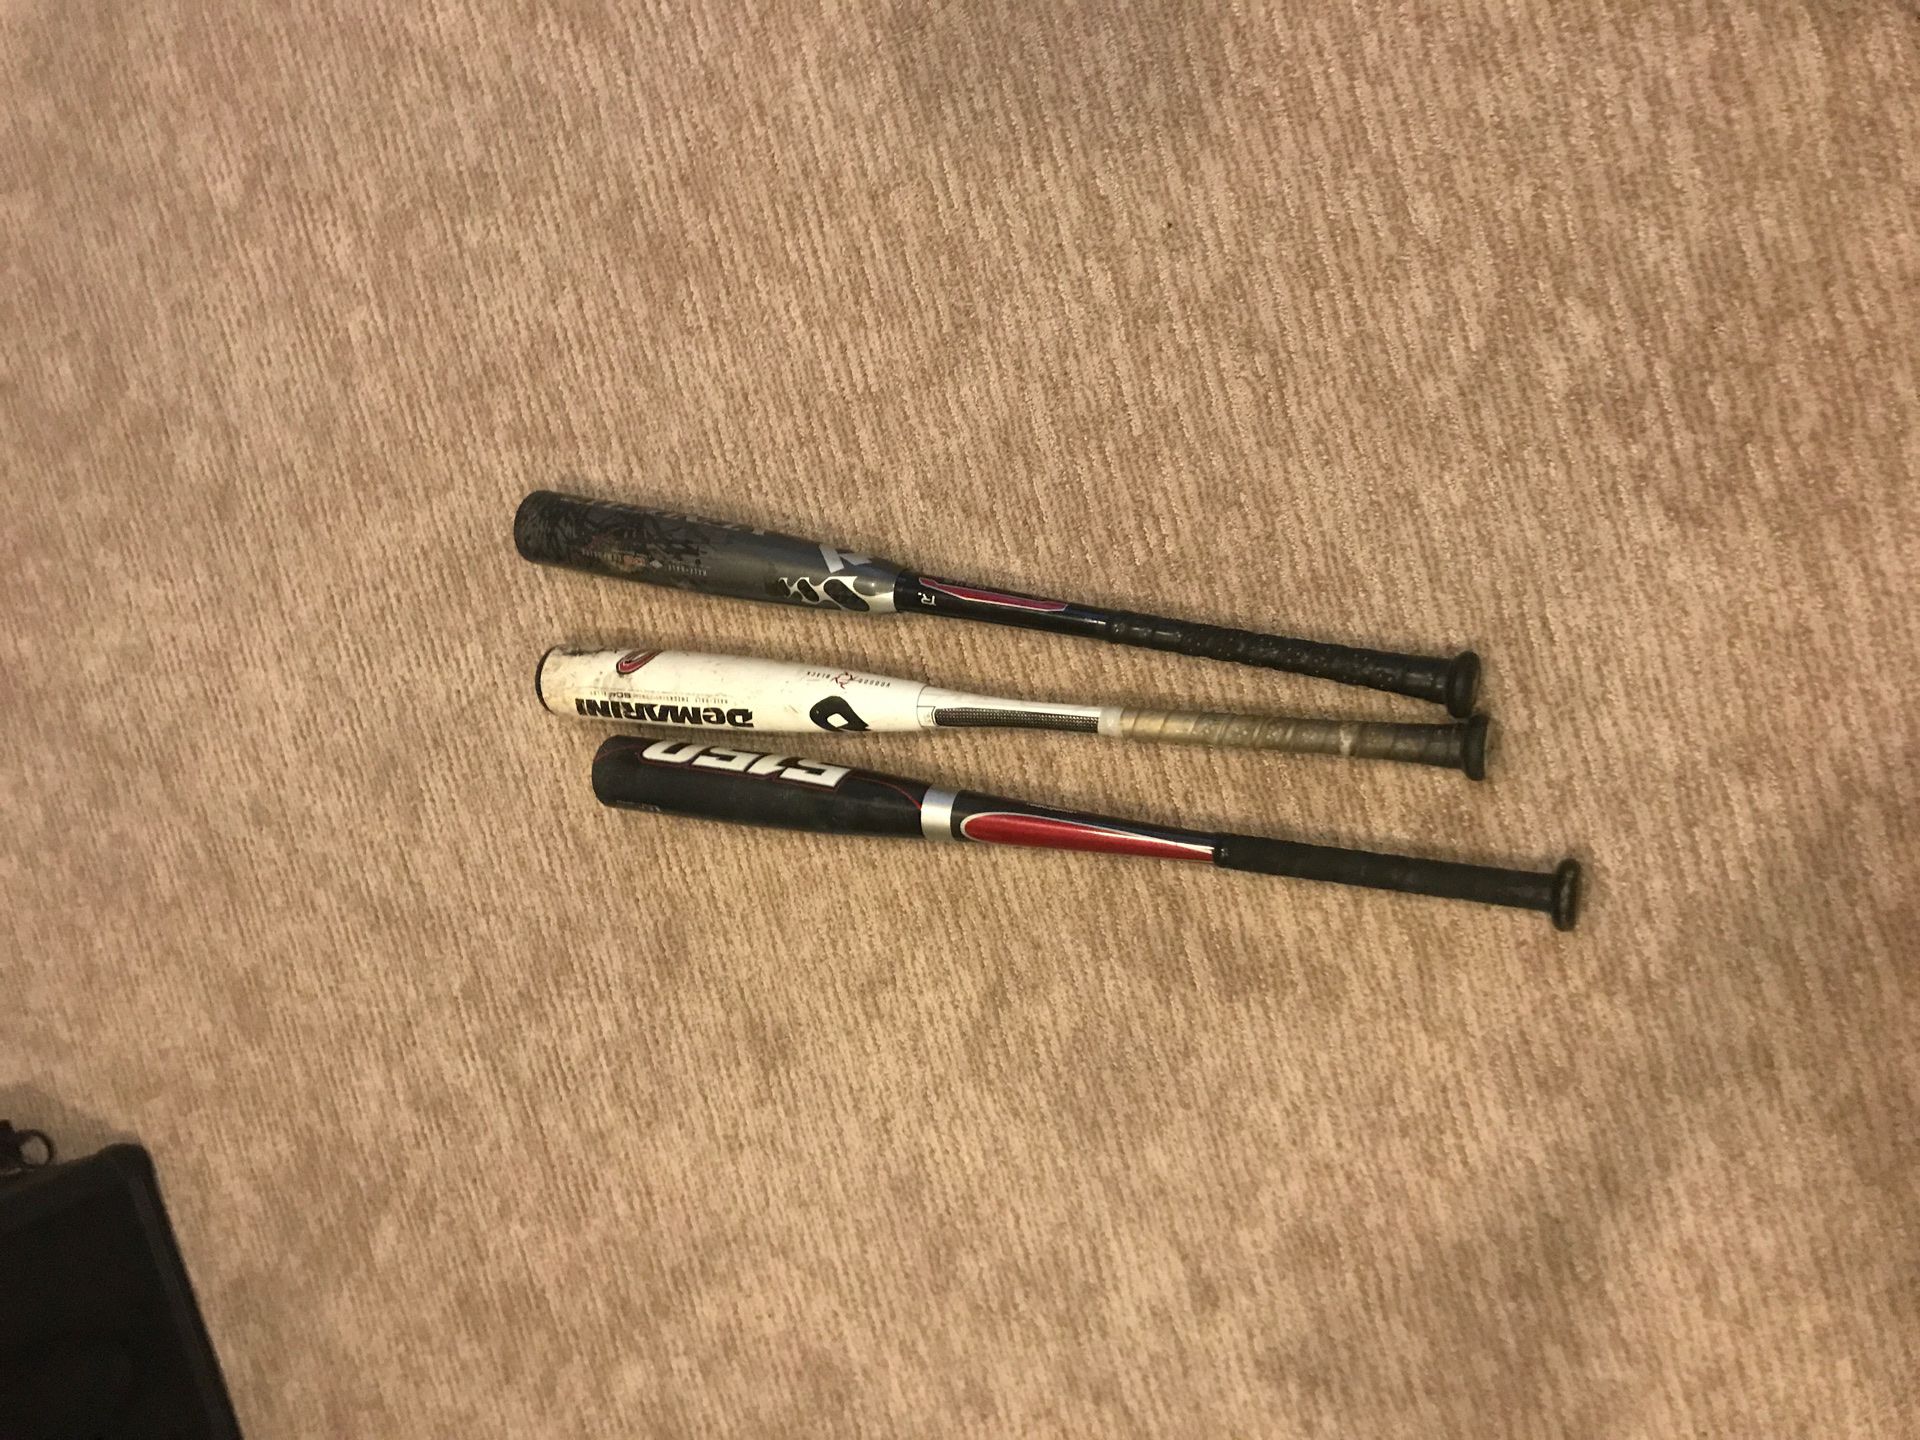 Three good baseball bats